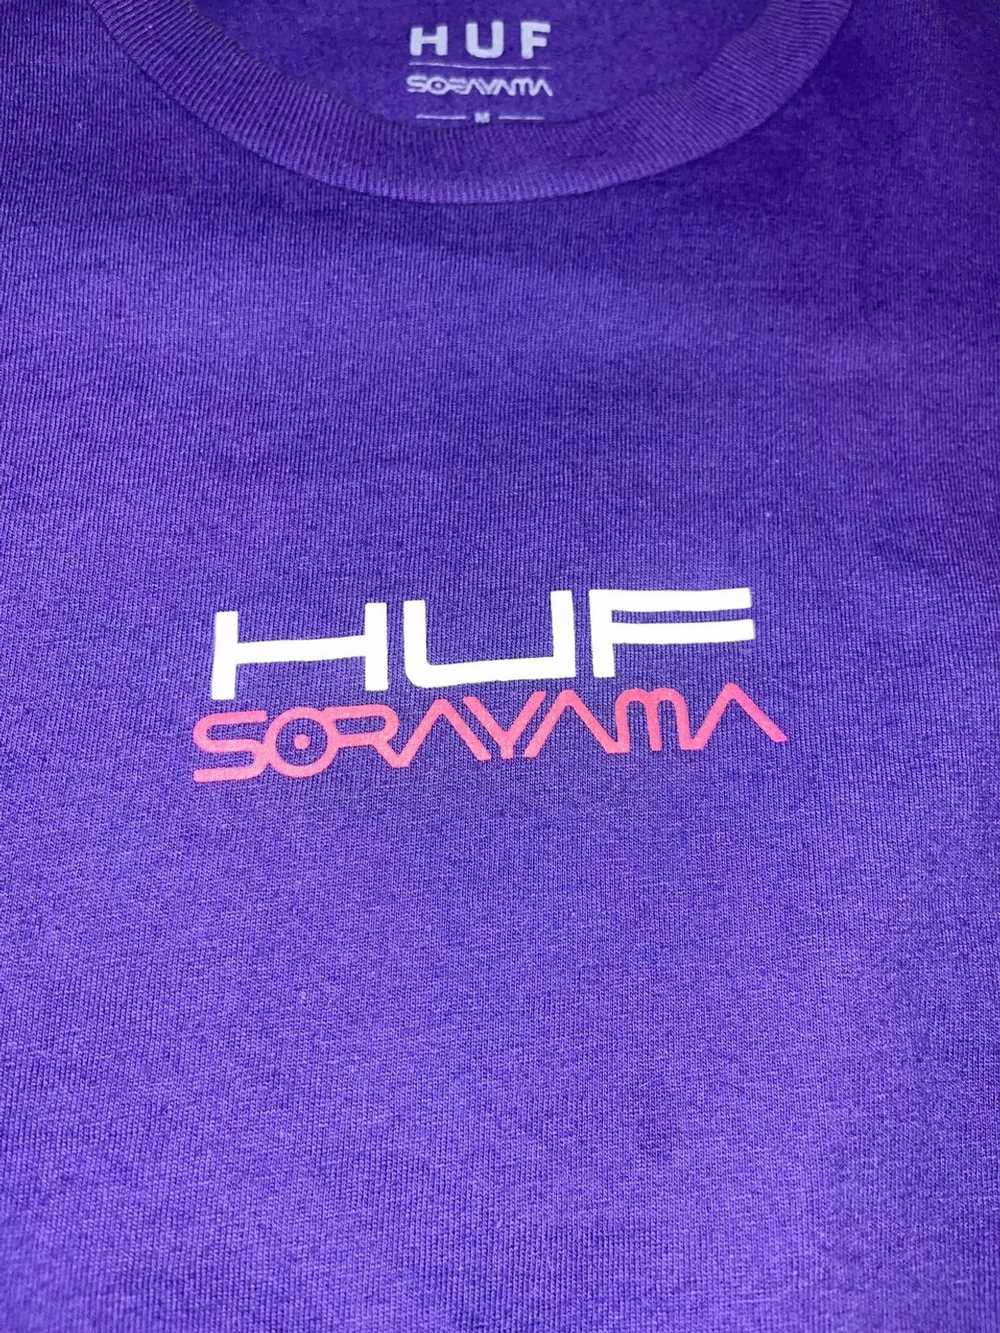 Huf Huff x sorayama - image 4